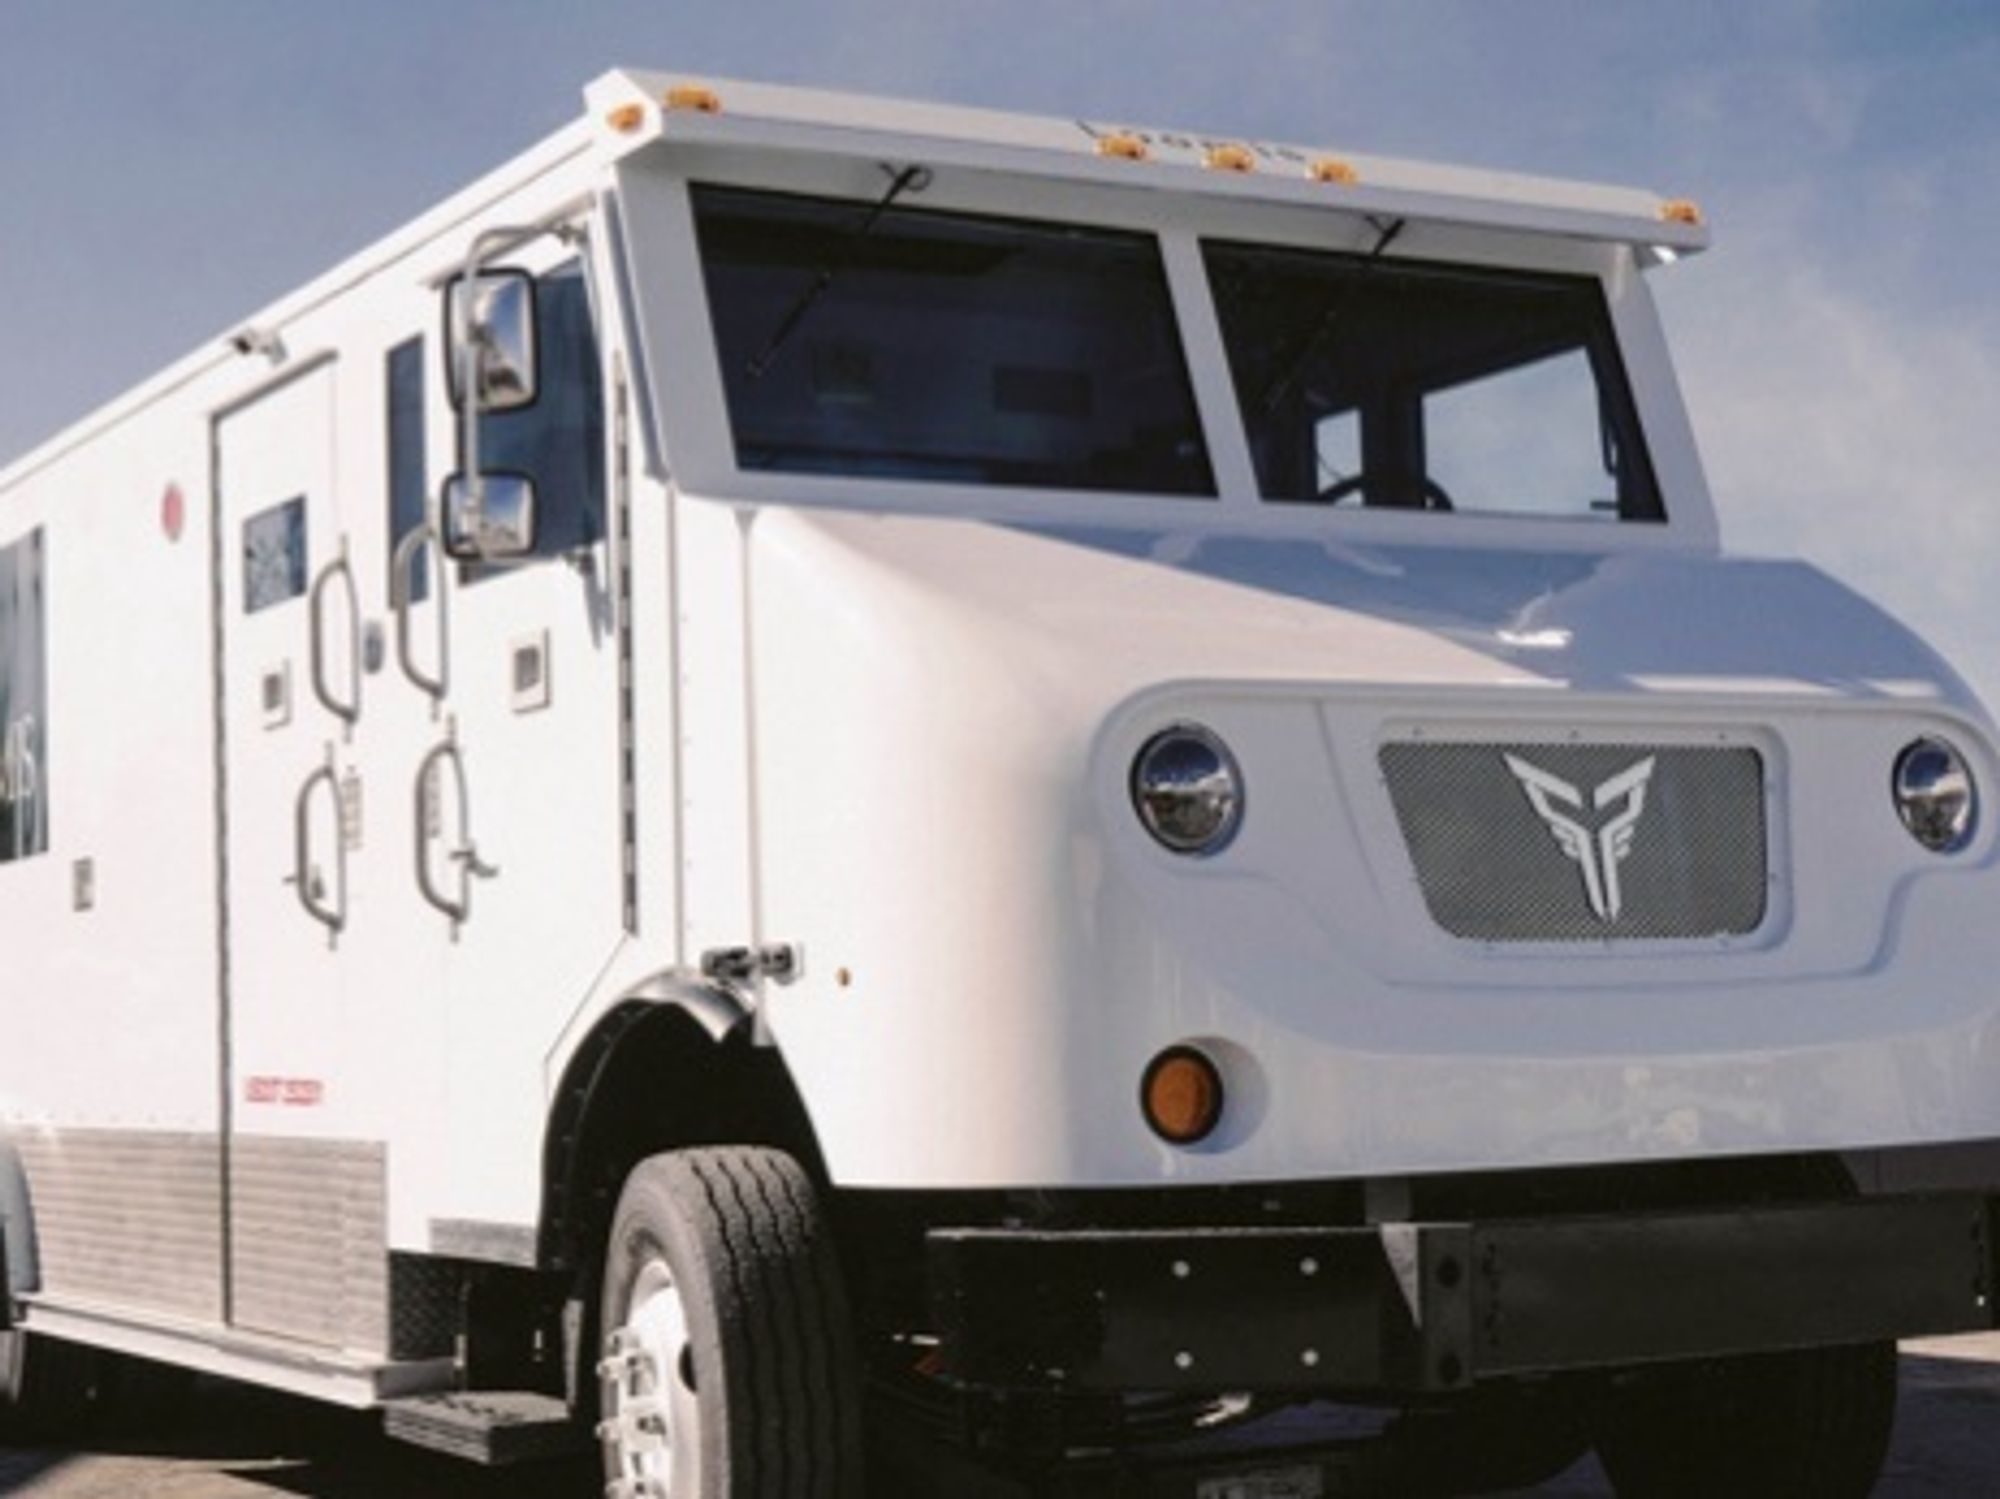 Xos Trucks Raises $20 Million to Produce Electric Delivery Vehicles